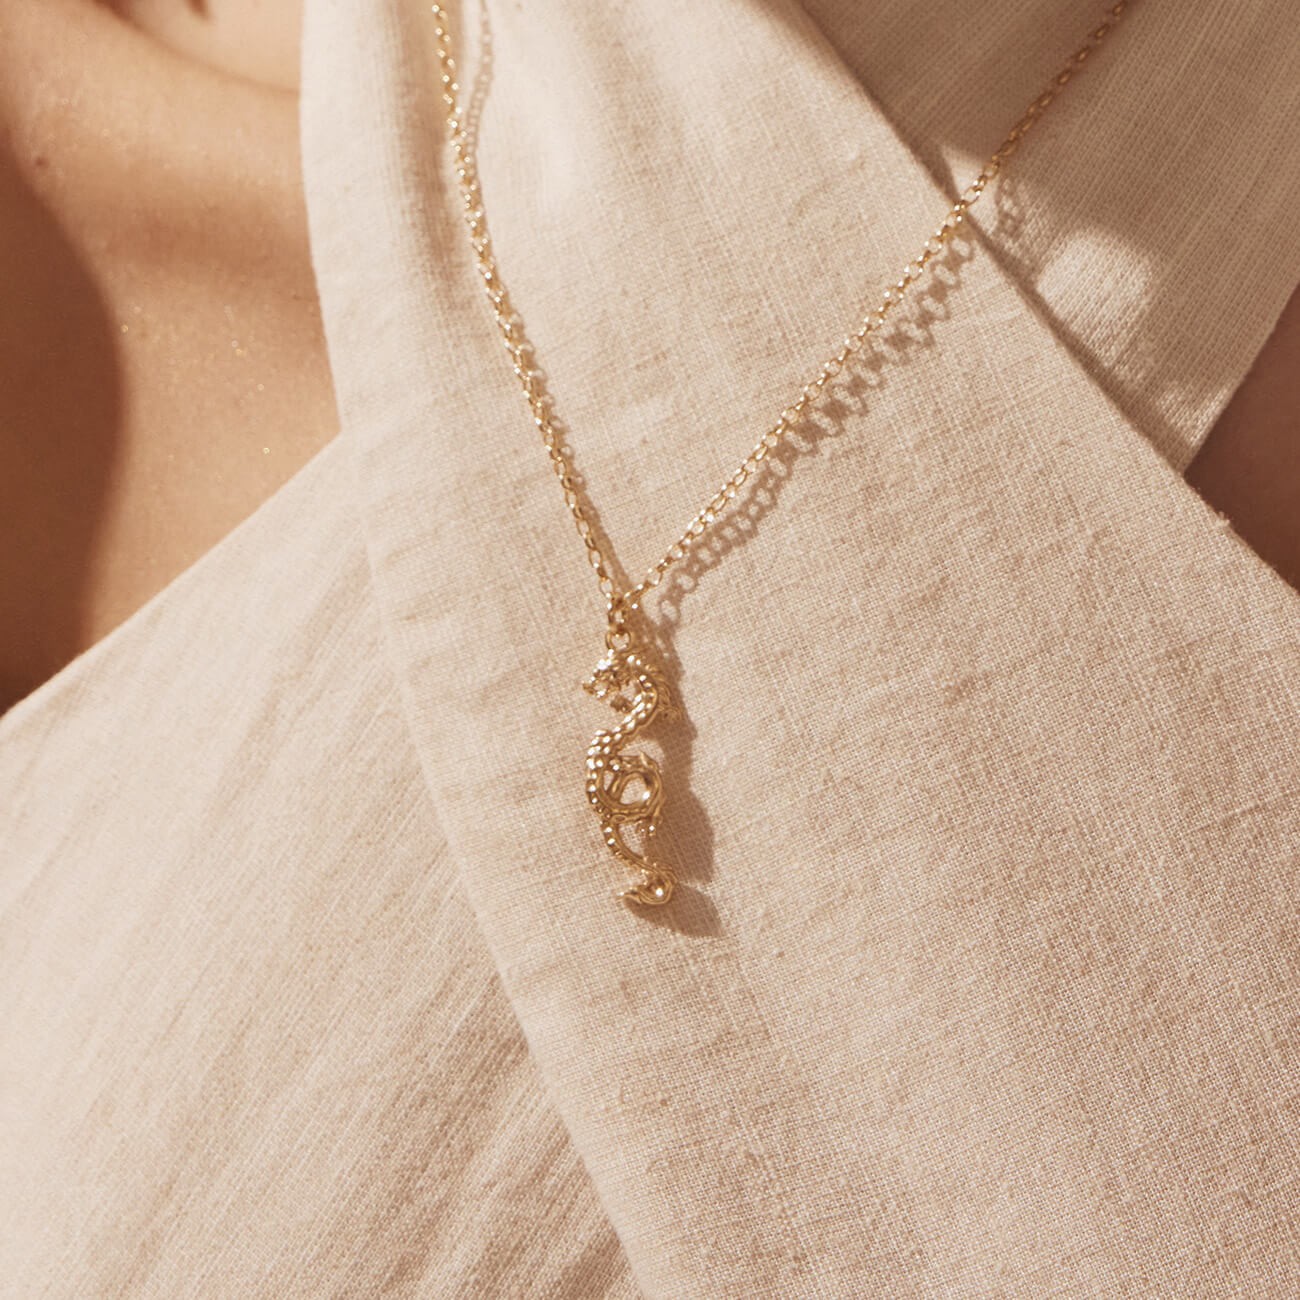 Silver dragon necklace, AUGUSTYNKA x GIORRE